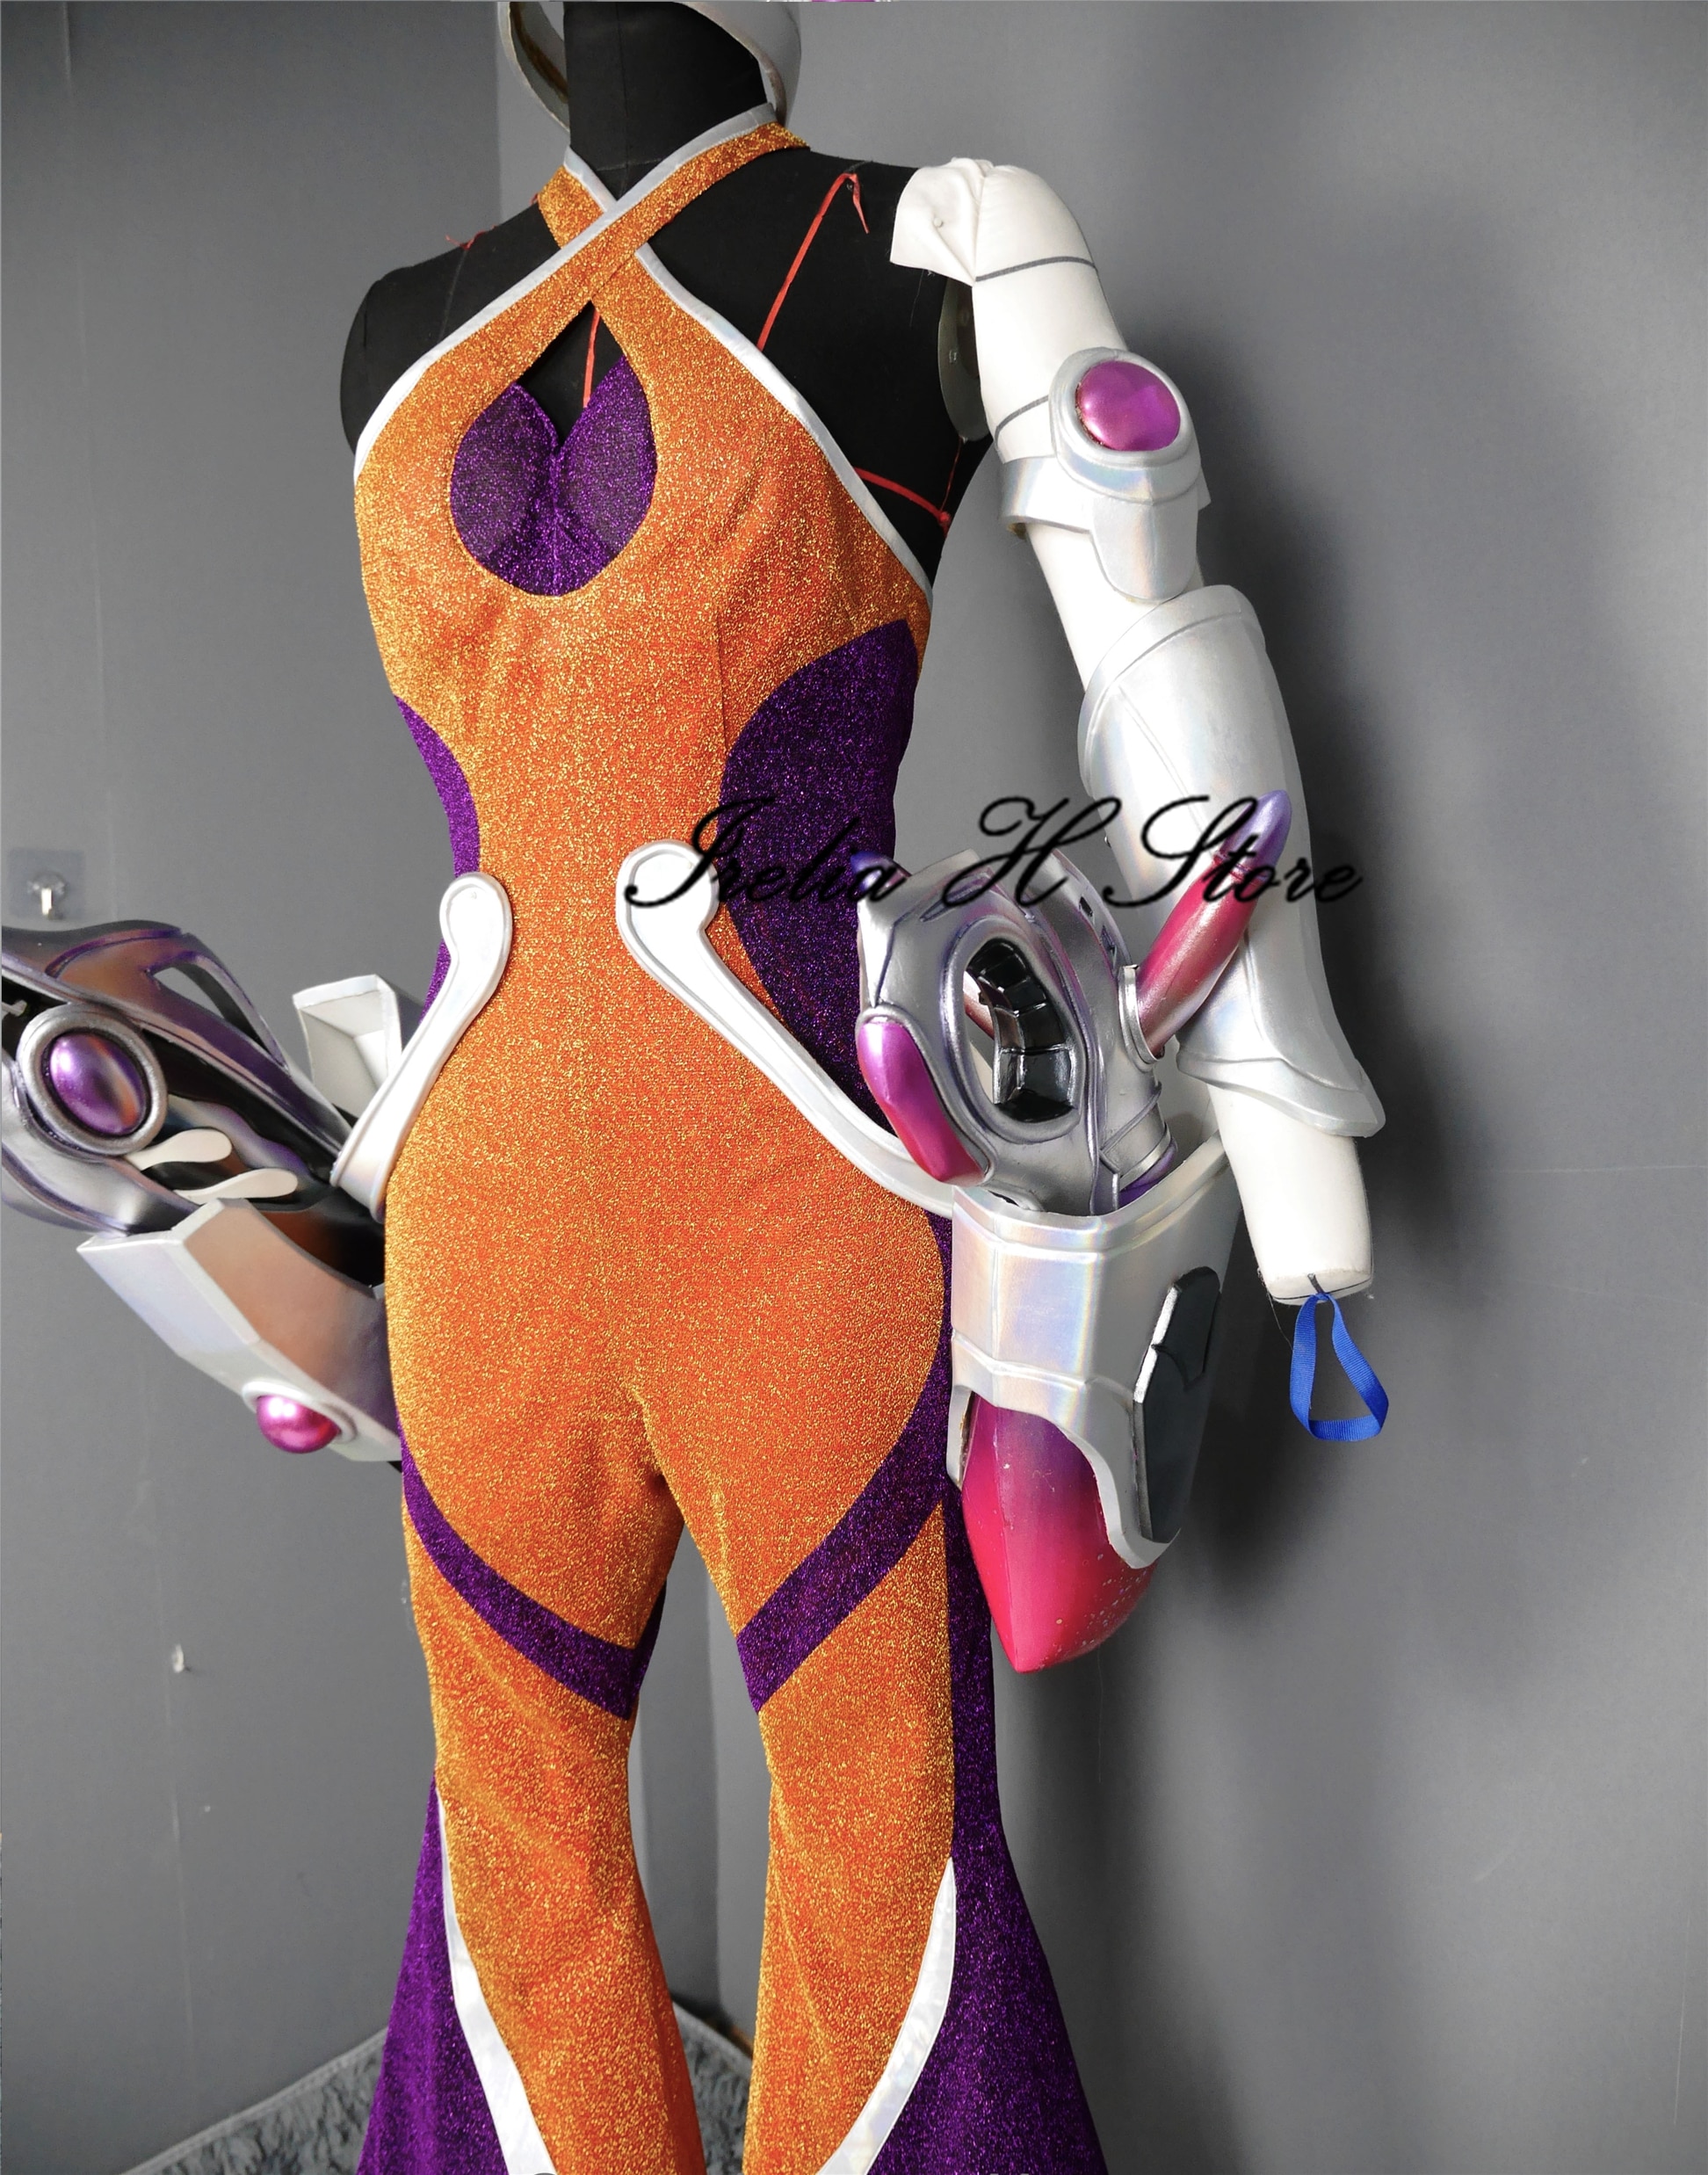 Irelia H Store 2021 new skin LOL Space Rhythm Samira Cosplay Costume Full set Customized Custom made/size